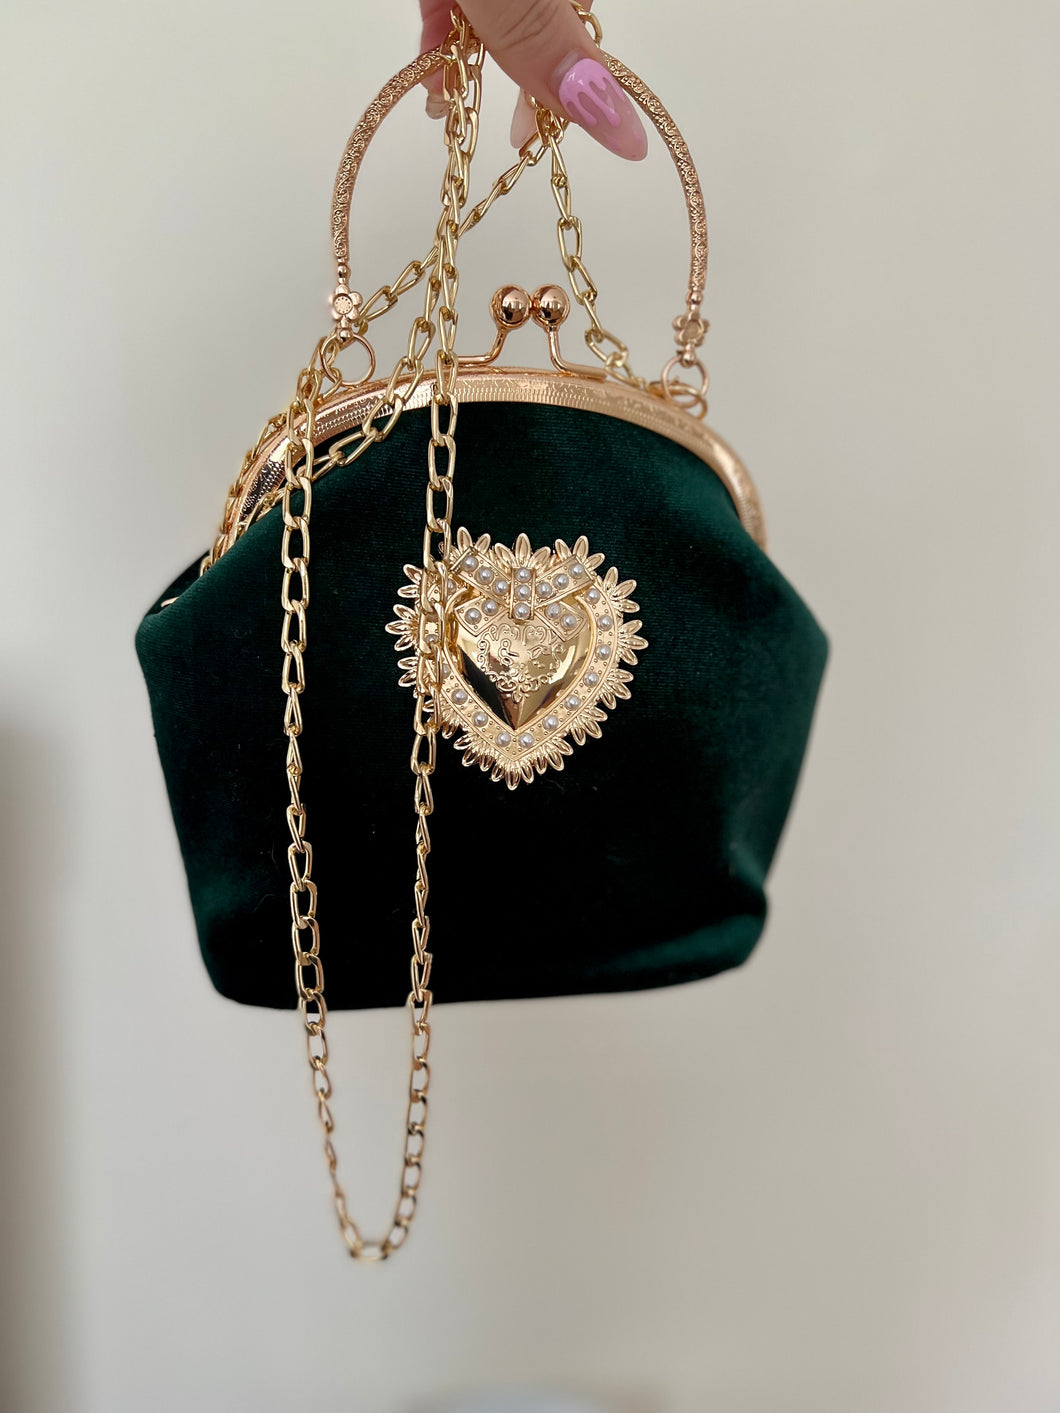 Royalty Bag in Emerald Green